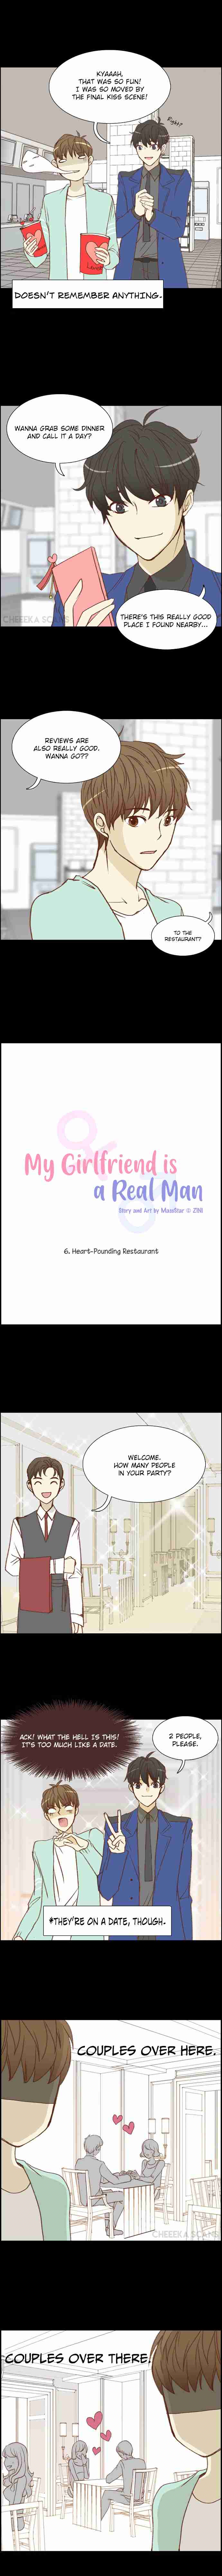 My Girlfriend is a Real Man Ch. 6 Heart Pounding Restaurant